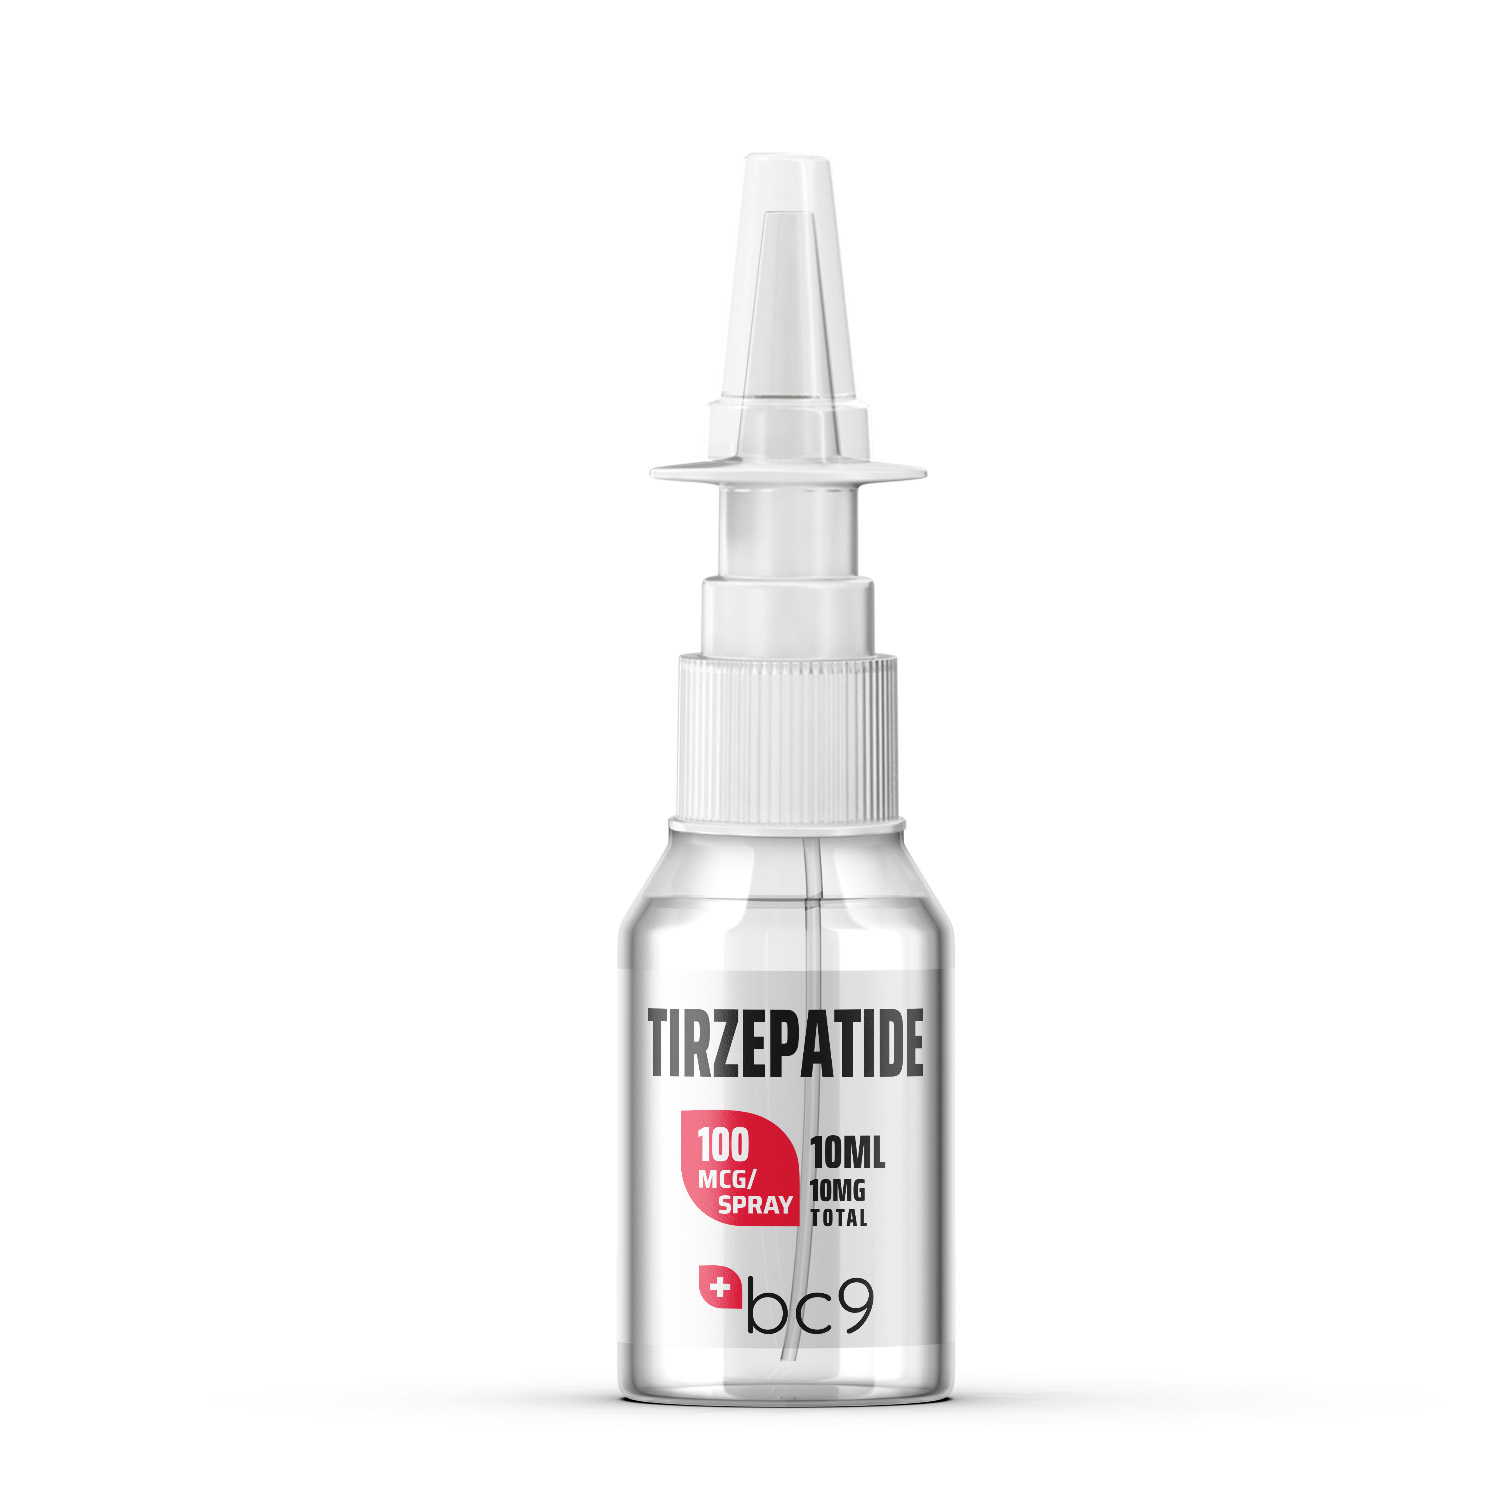 Tirzepatide Nasal Spray For Sale | BC9.org